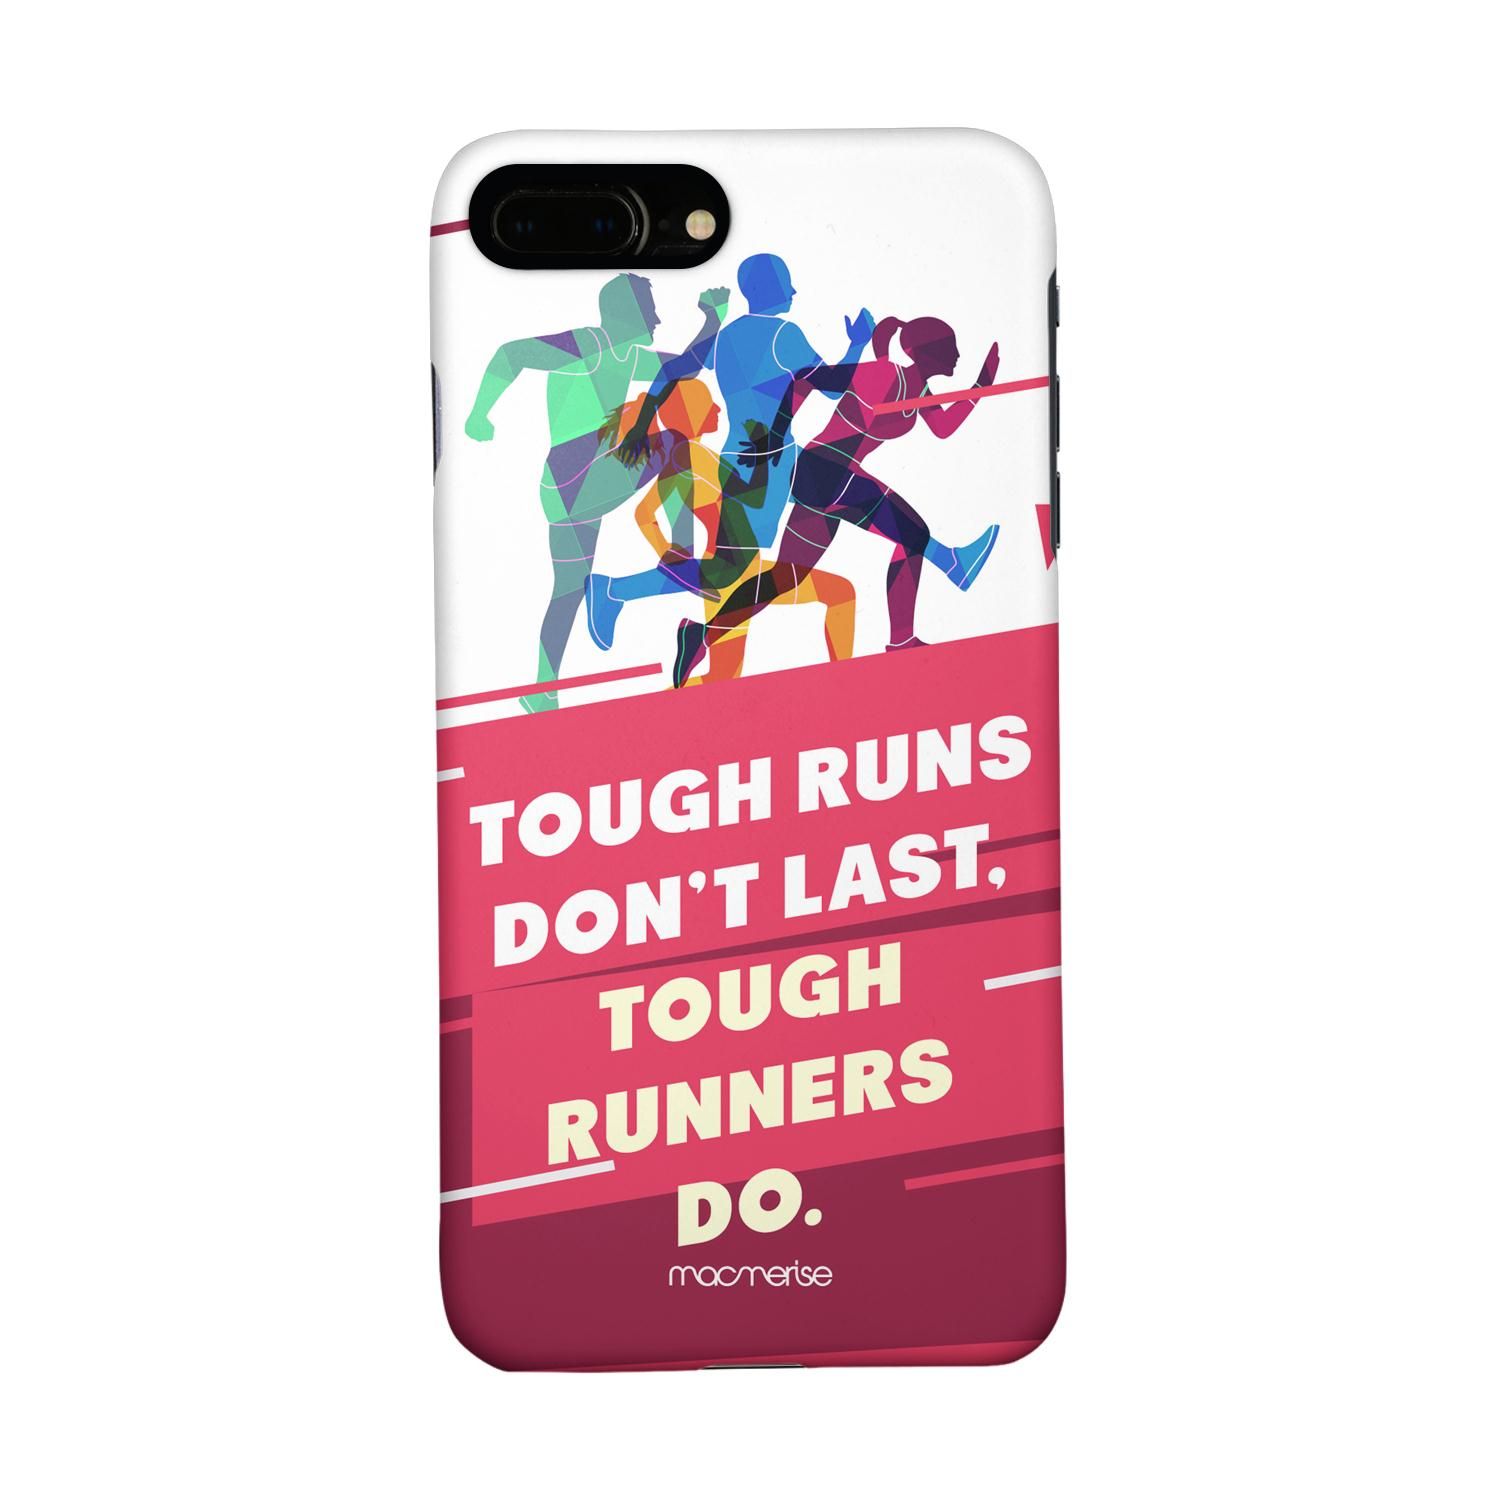 Buy Tough Runners - Sleek Phone Case for iPhone 7 Plus Online